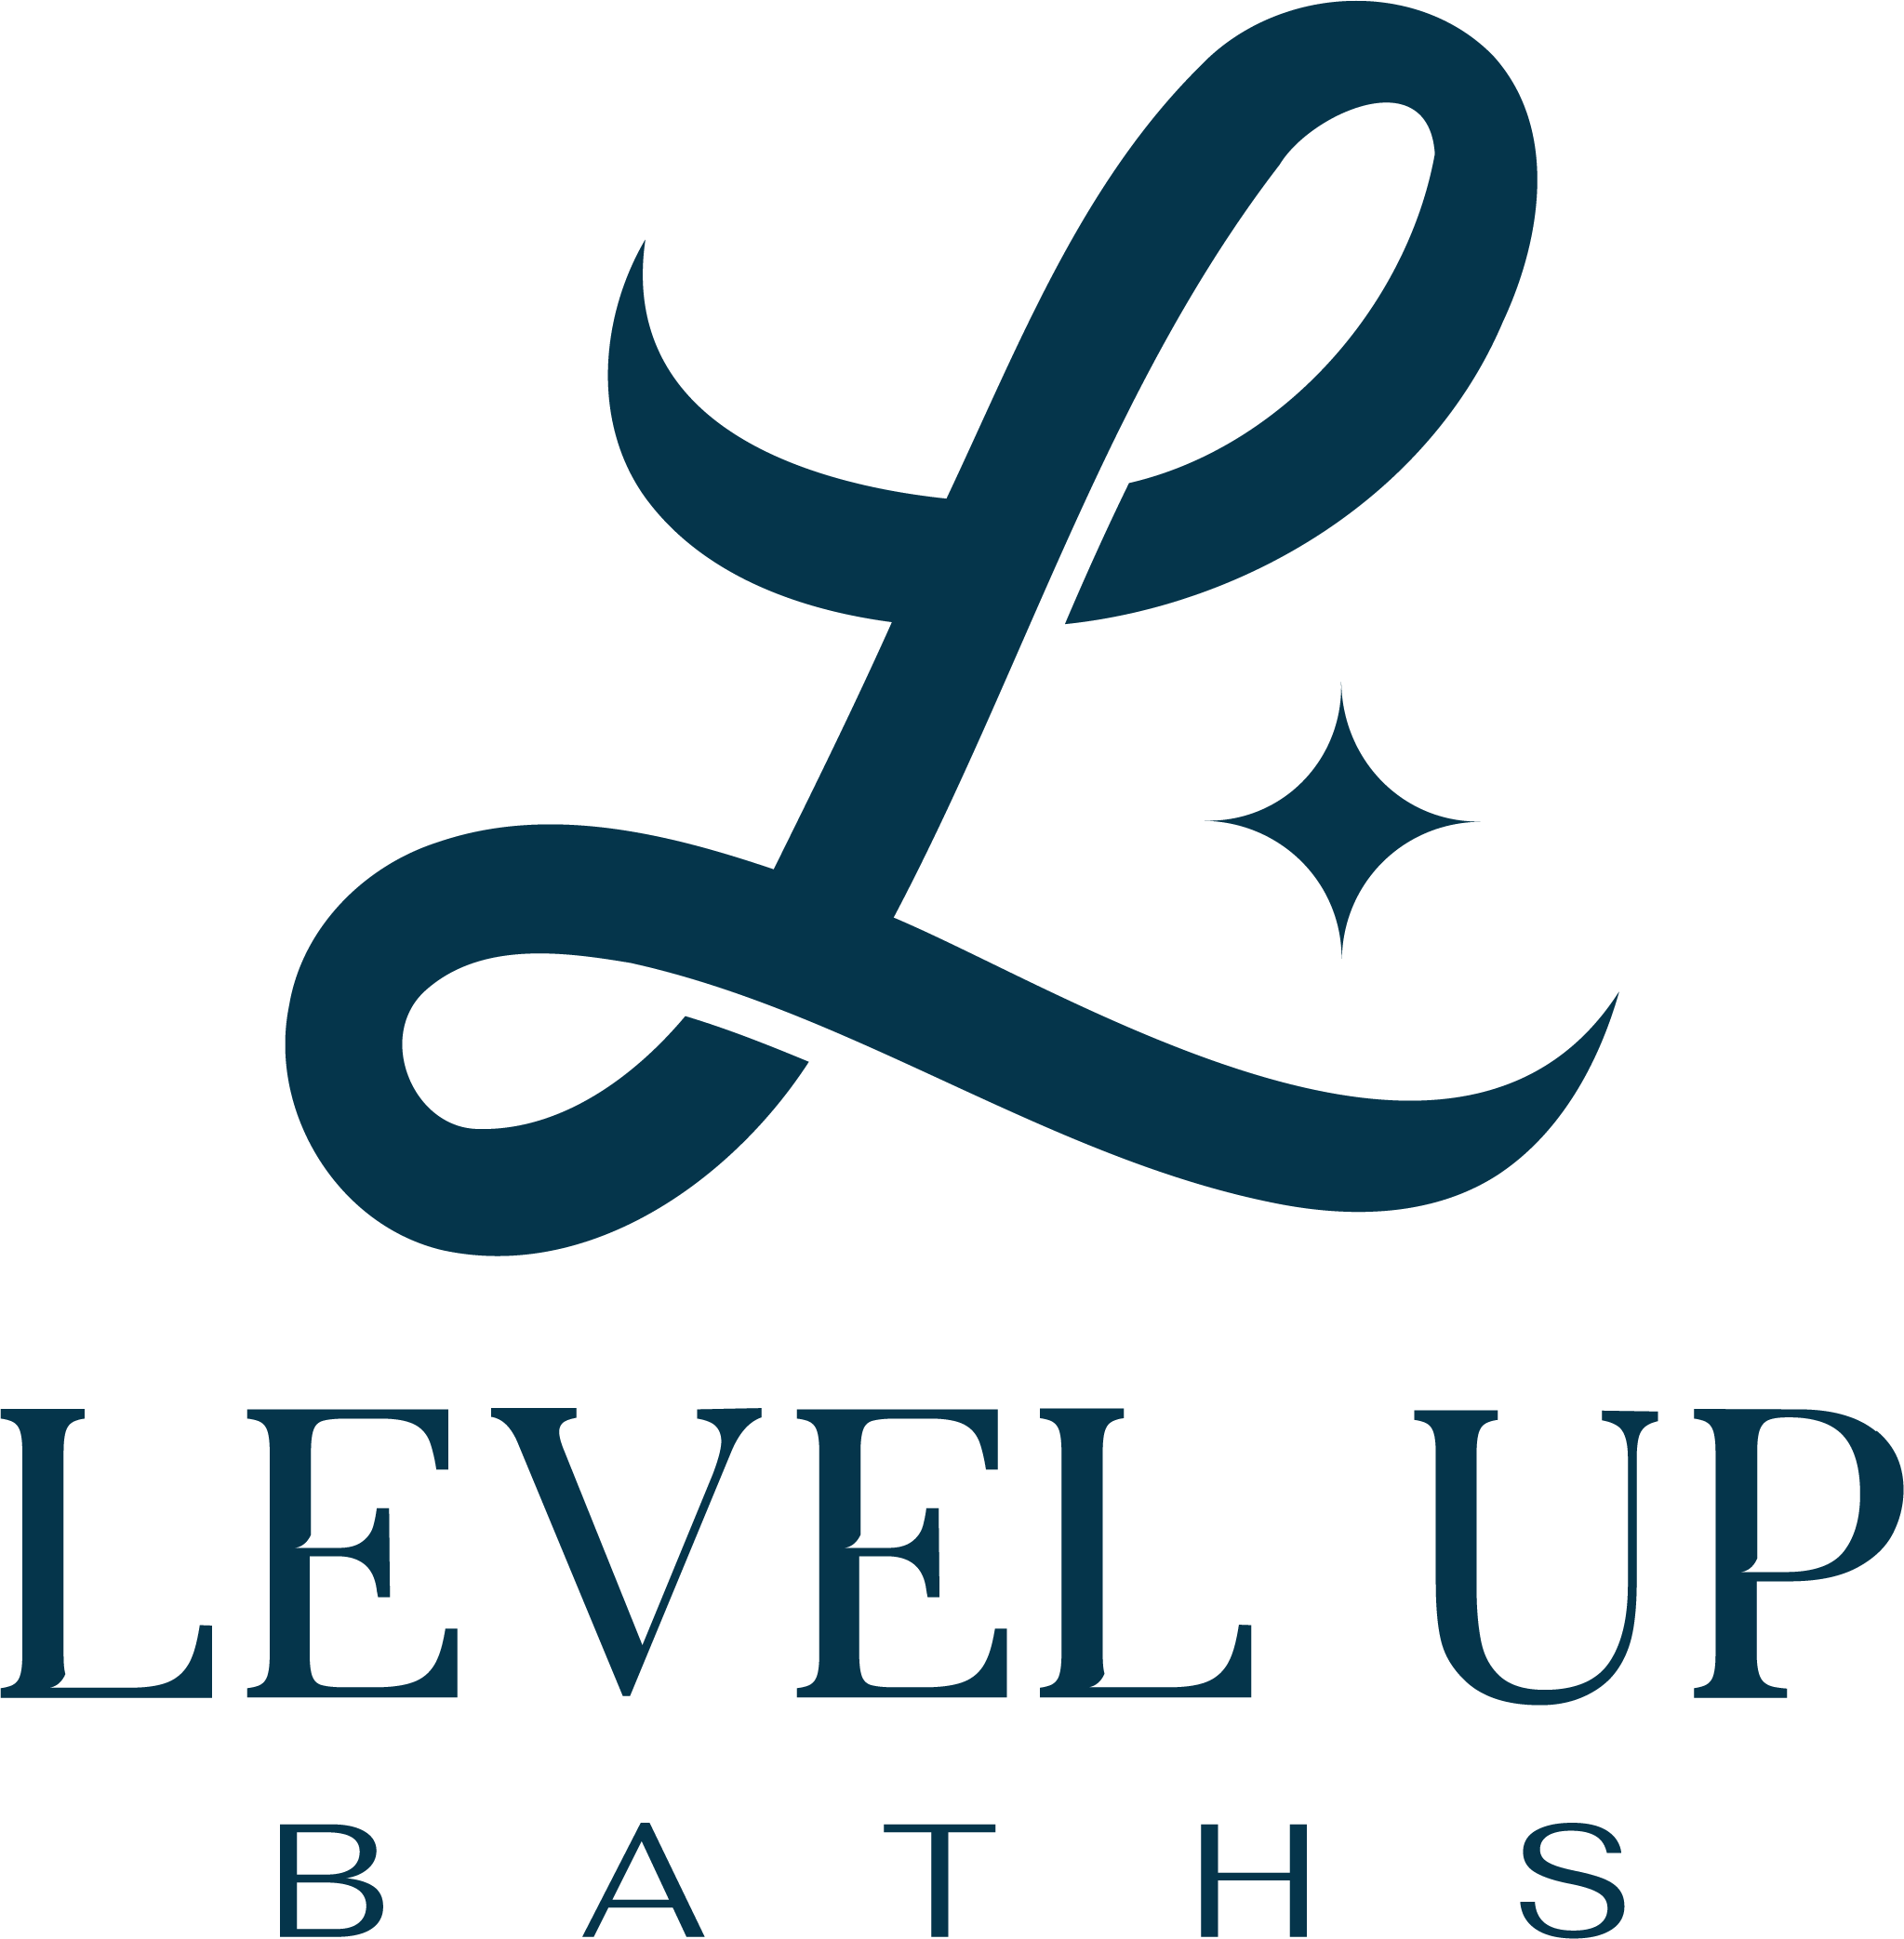 Level up baths logo